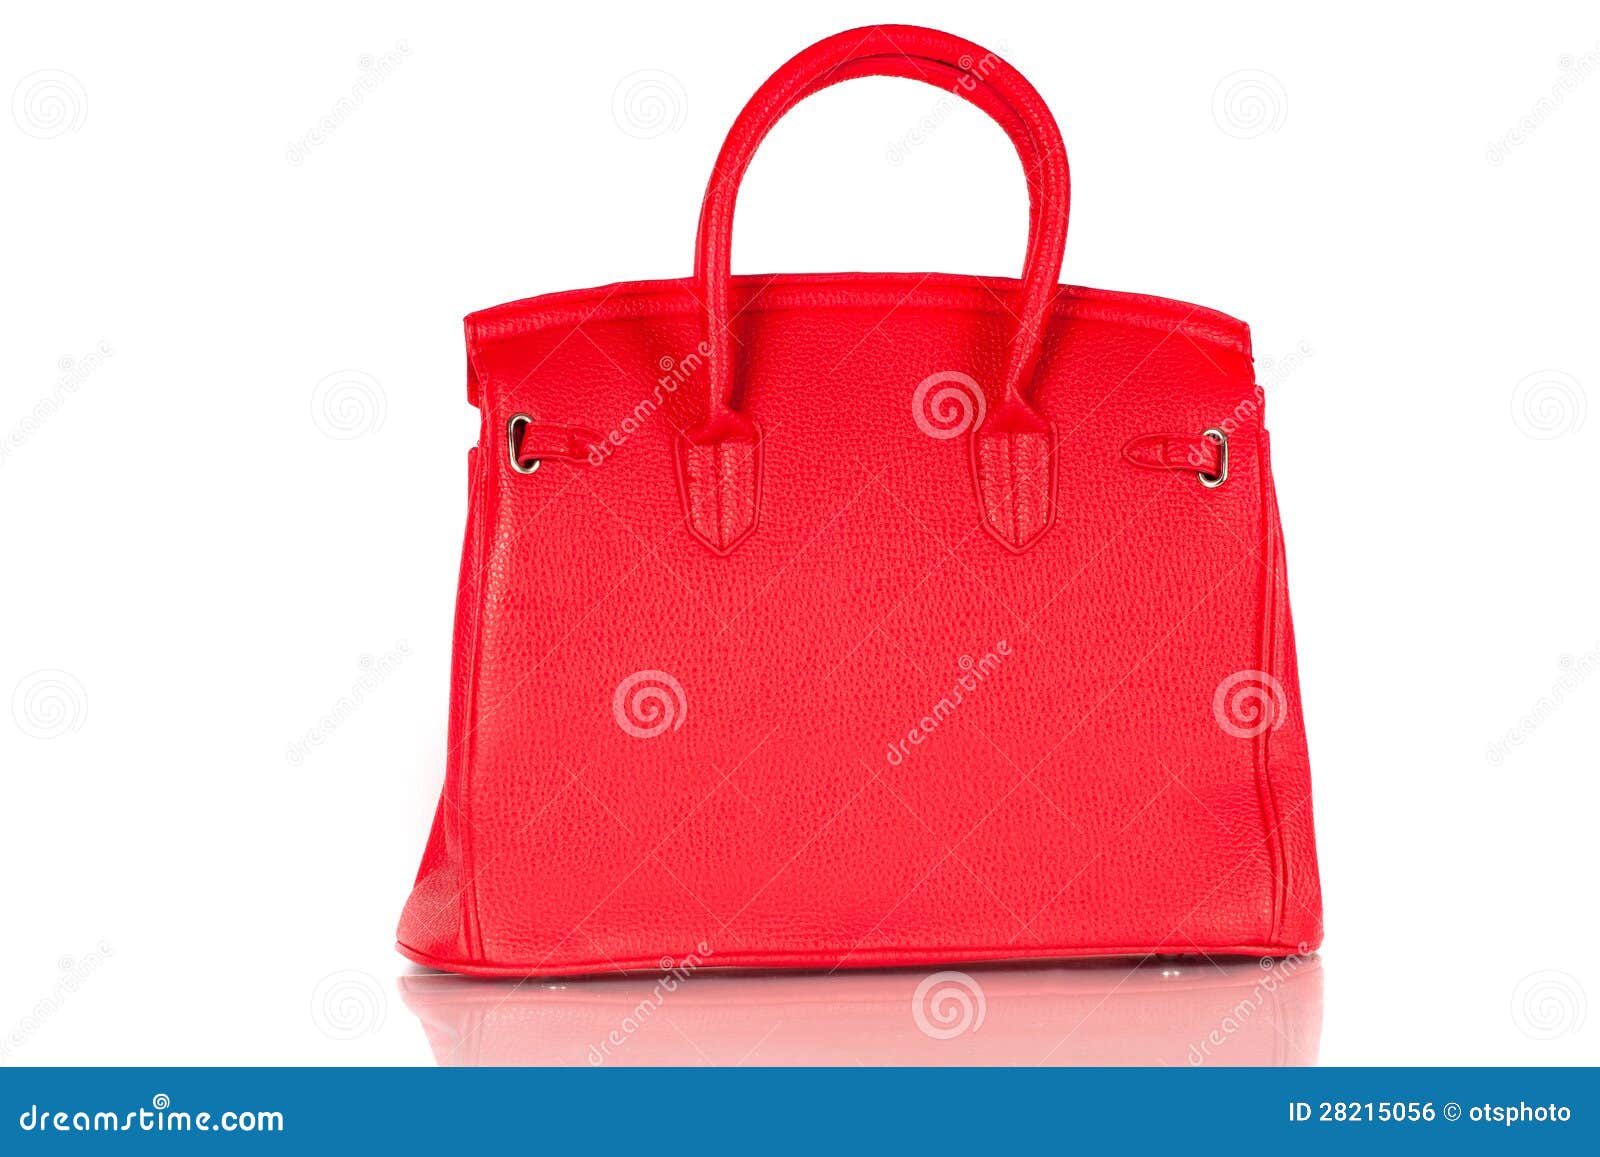 Red leather handbag stock photo. Image of object, design - 28215056